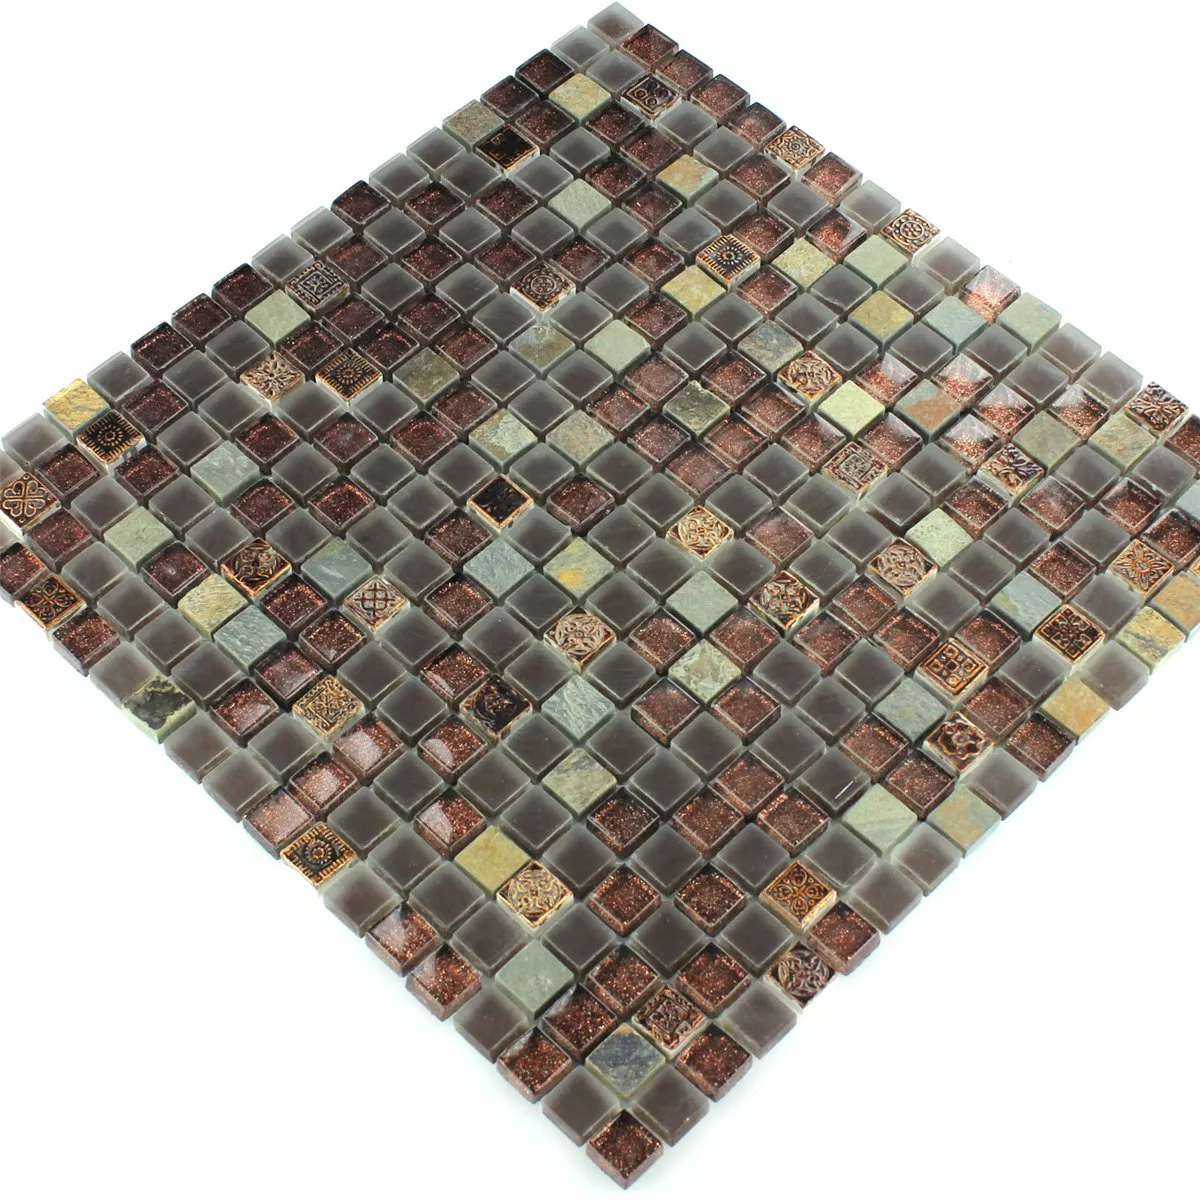 Vetro Calcare Quarzite Mosaico Piastrella Luccichio